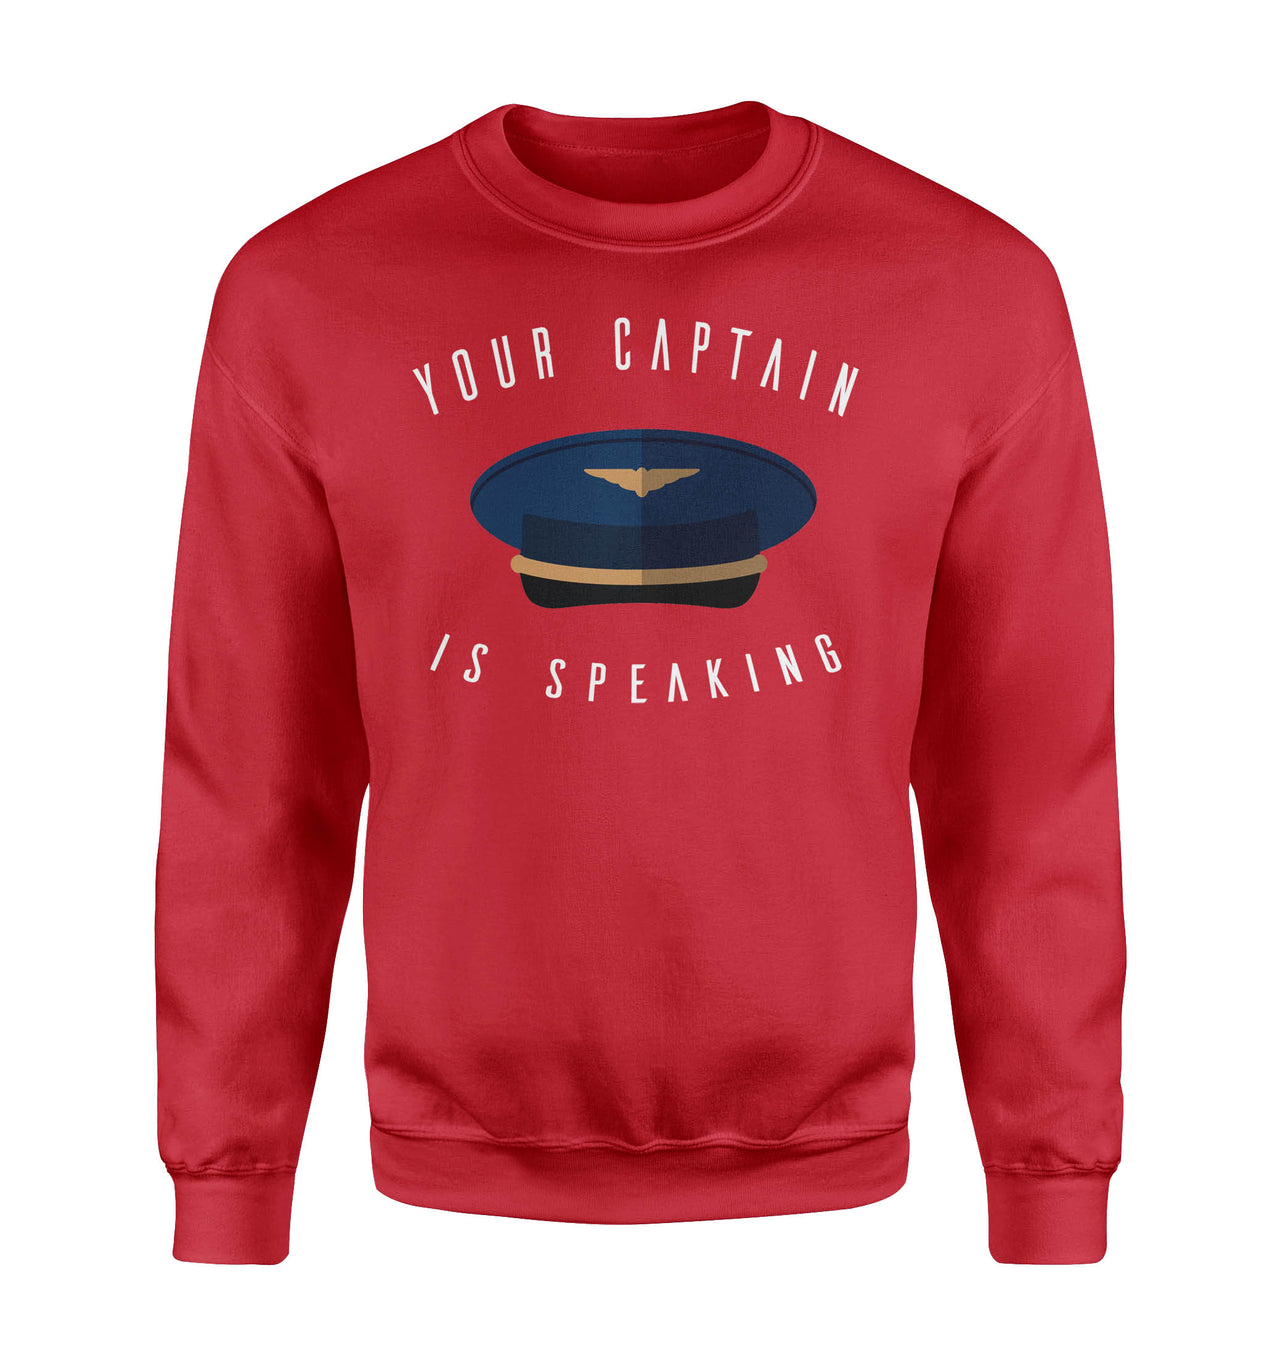 Your Captain Is Speaking Designed Sweatshirts